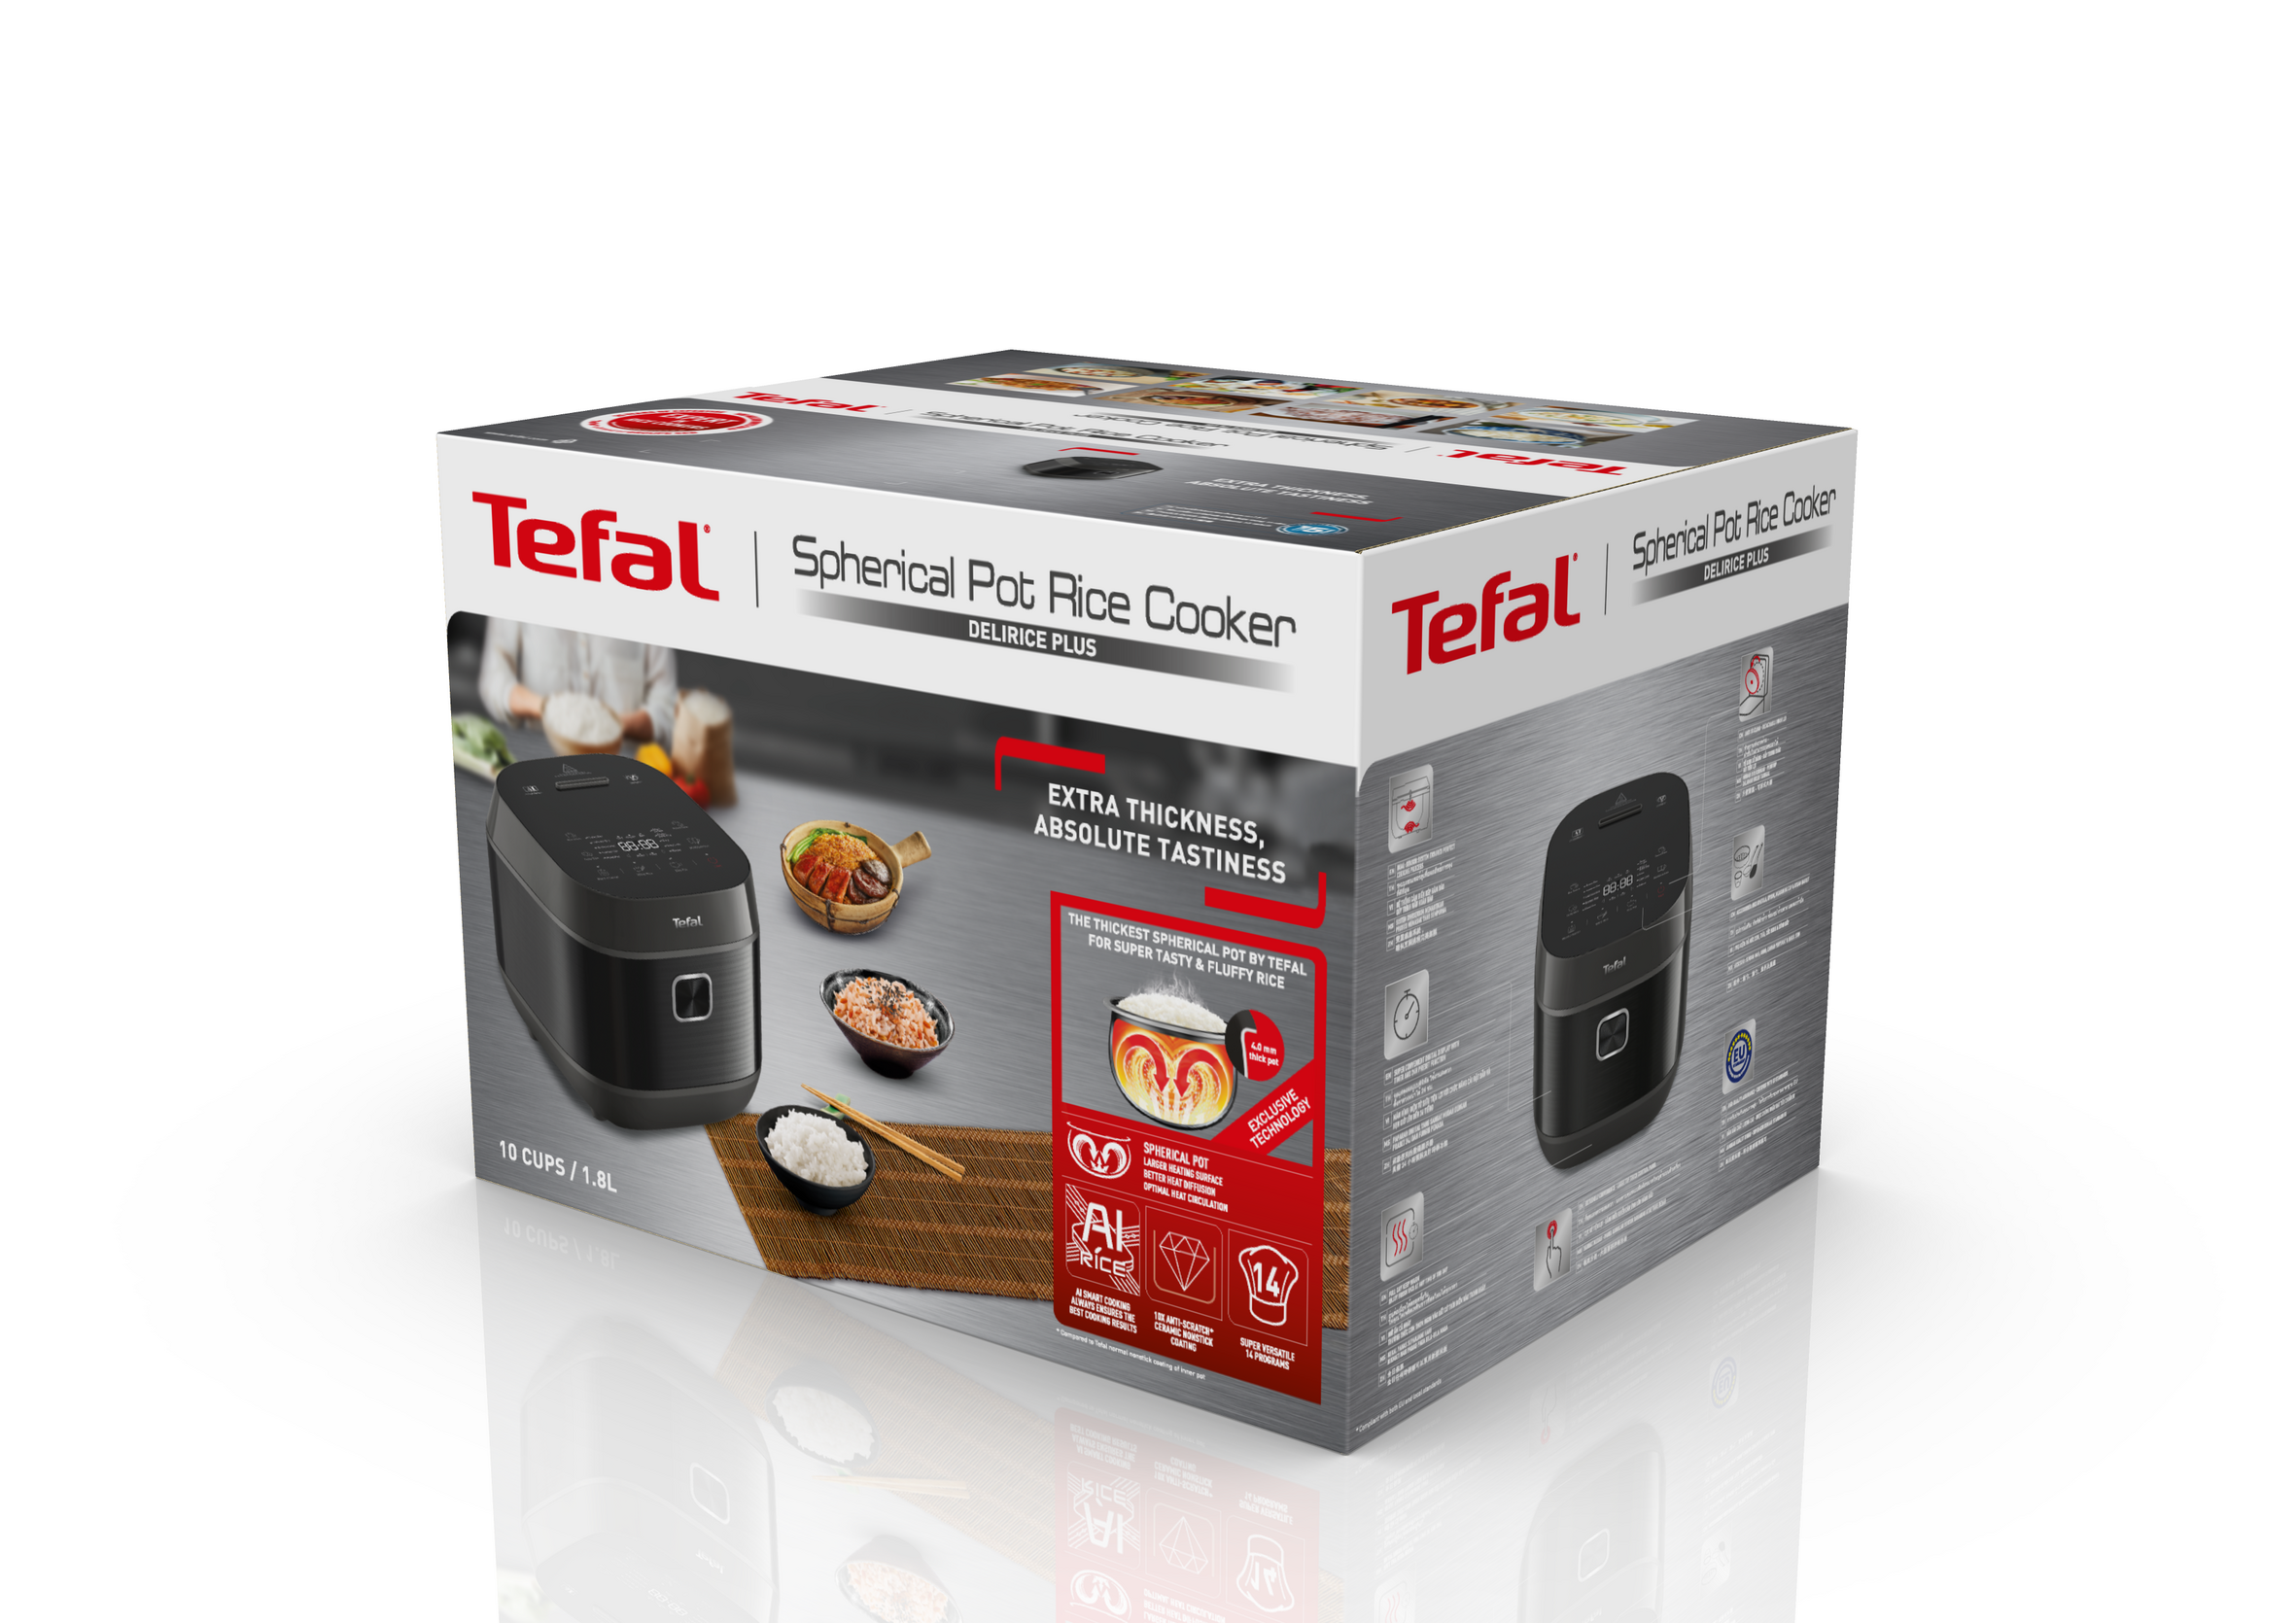 Tefal Delirice Plus Spherical Pot Digital Rice Cooker 1.8L 10 Cups RK776B65 Anti Scratch Ceramic Pot Automatic Keep Warm